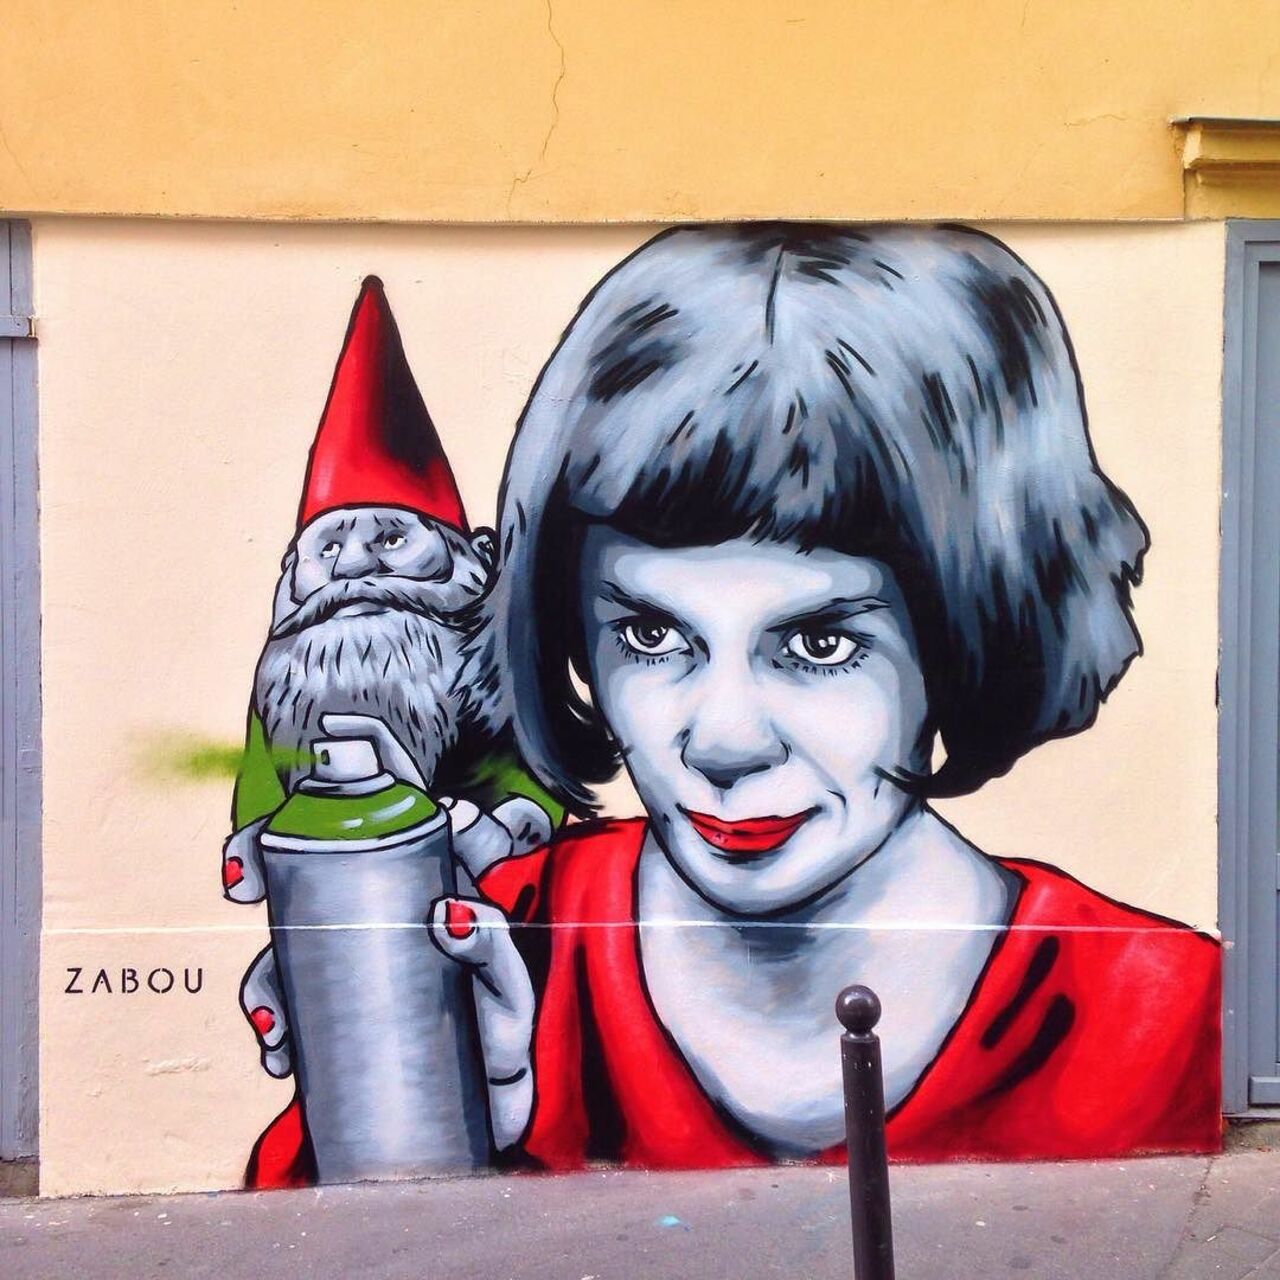 #Paris #graffiti photo by @searchfordelicious http://ift.tt/1Xu25kC #StreetArt https://t.co/gY9ISkV5fW